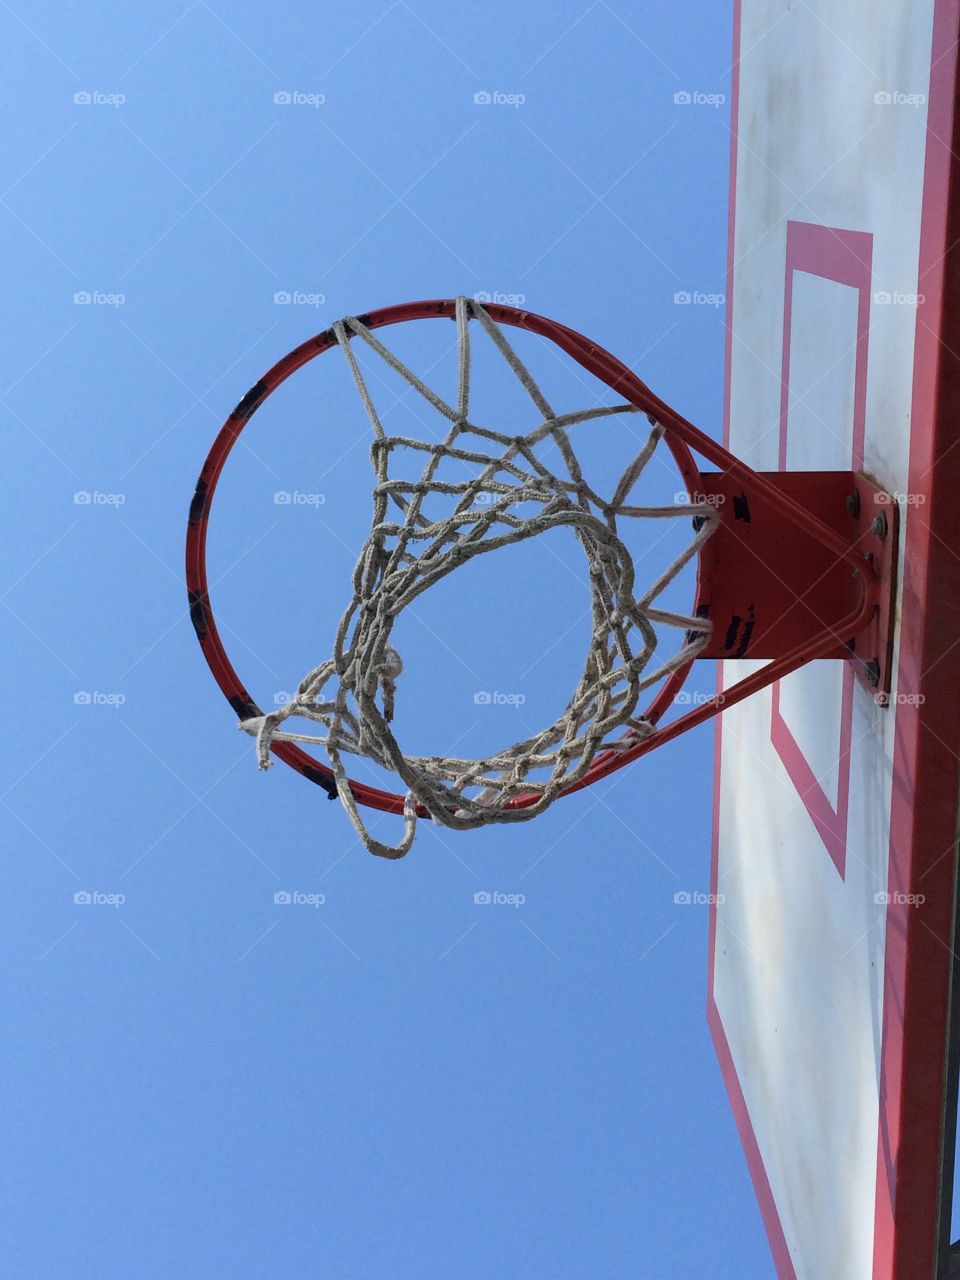 Basketball hoop/net